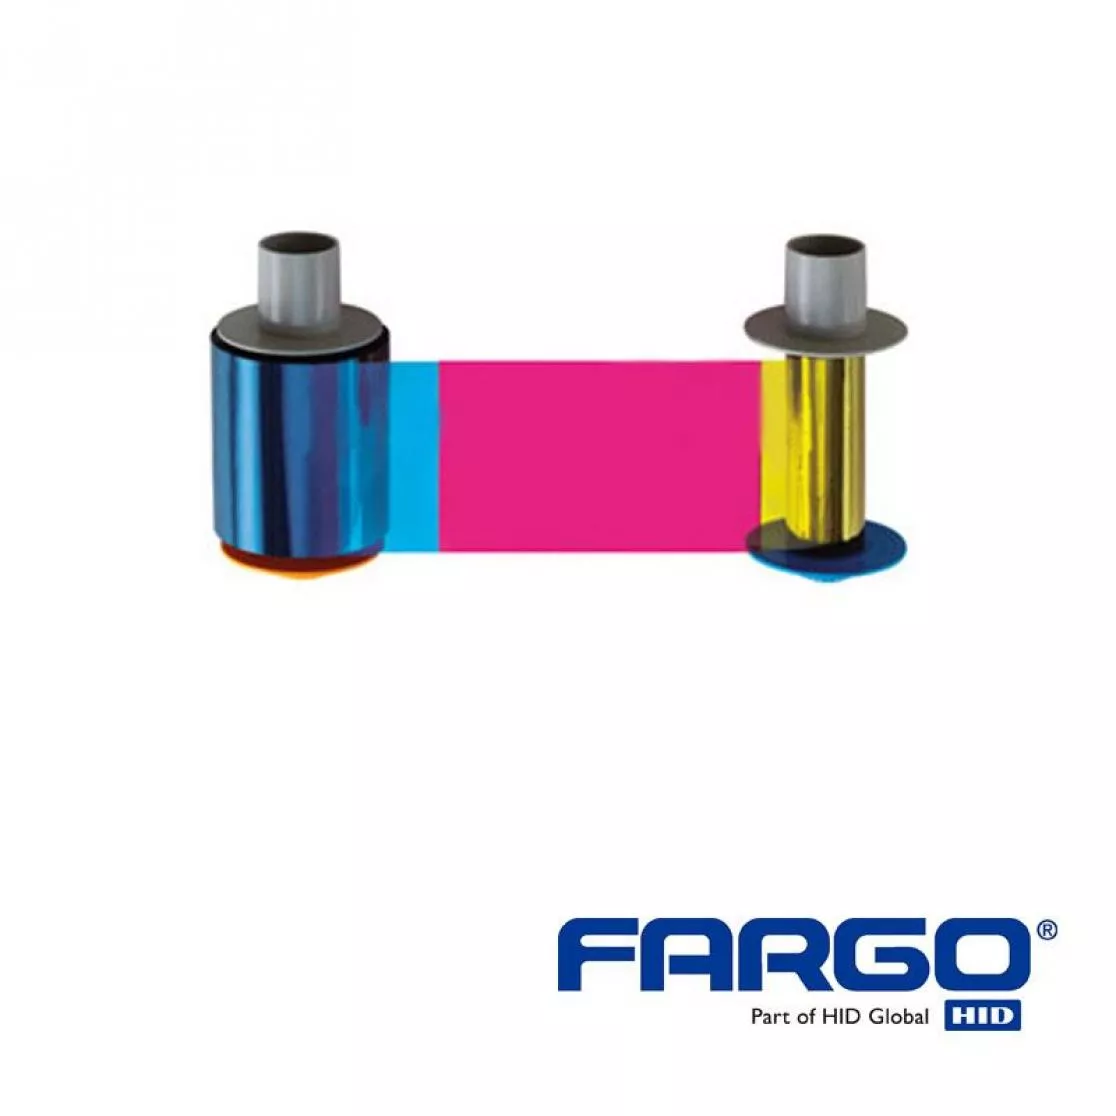 Ribbon colorful heat seal for card printer HID Fargo HDP8500